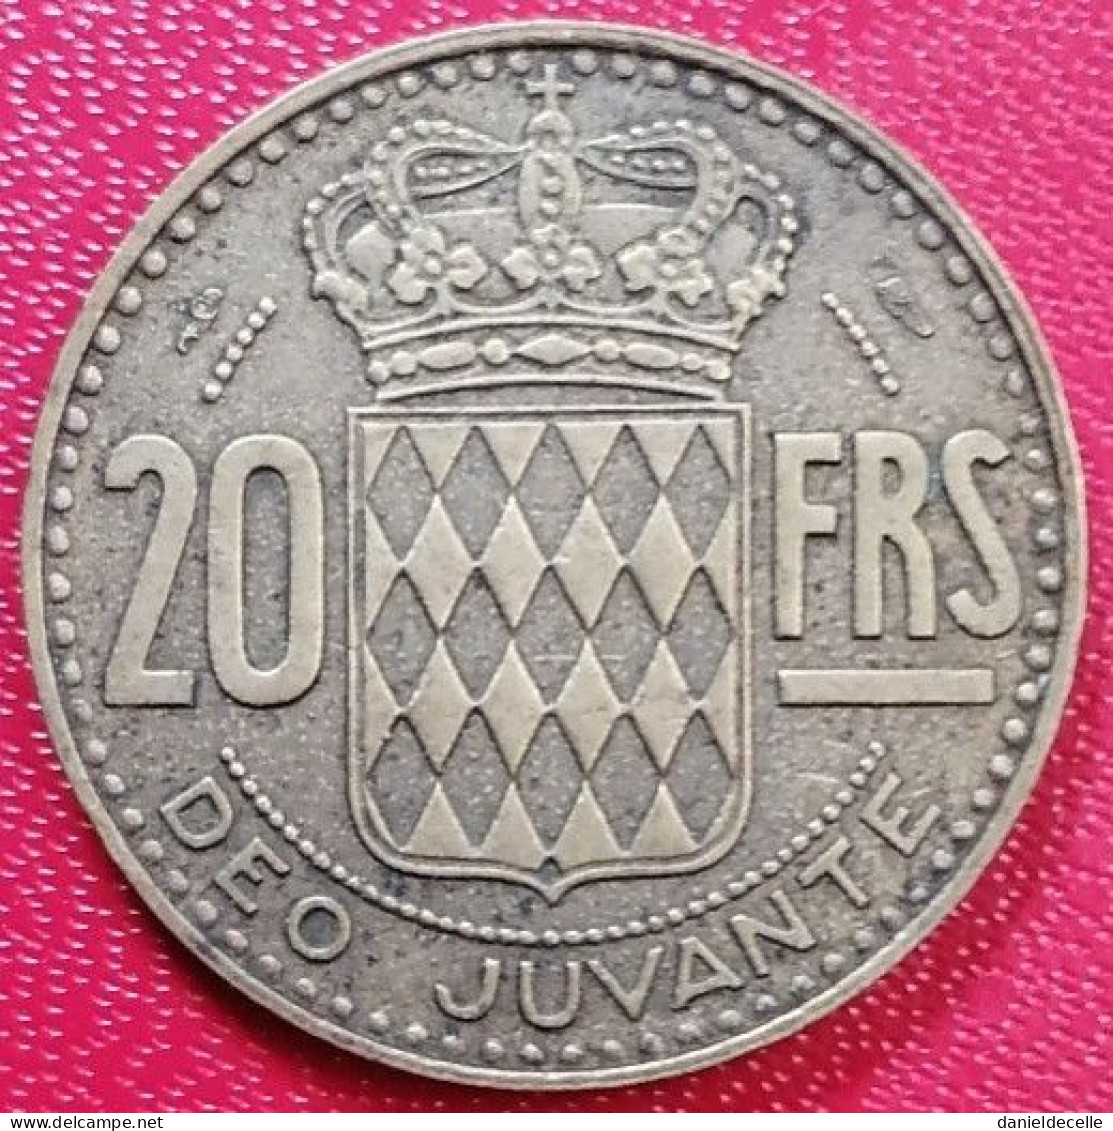 20 Francs 1950 Monaco (TTB) - 1949-1956 Alte Francs